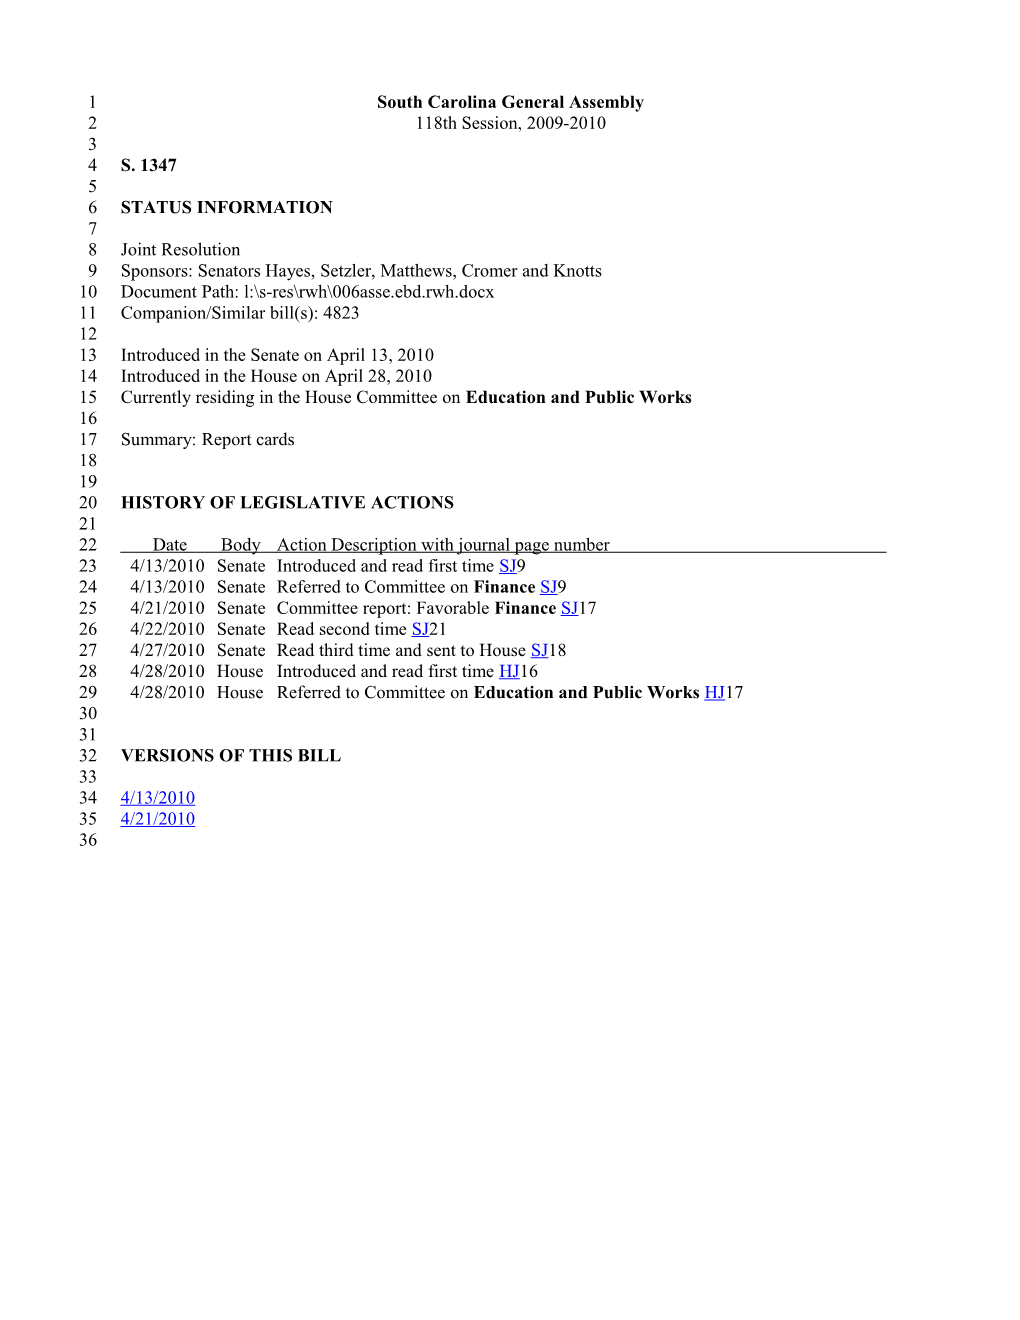 2009-2010 Bill 1347: Report Cards - South Carolina Legislature Online